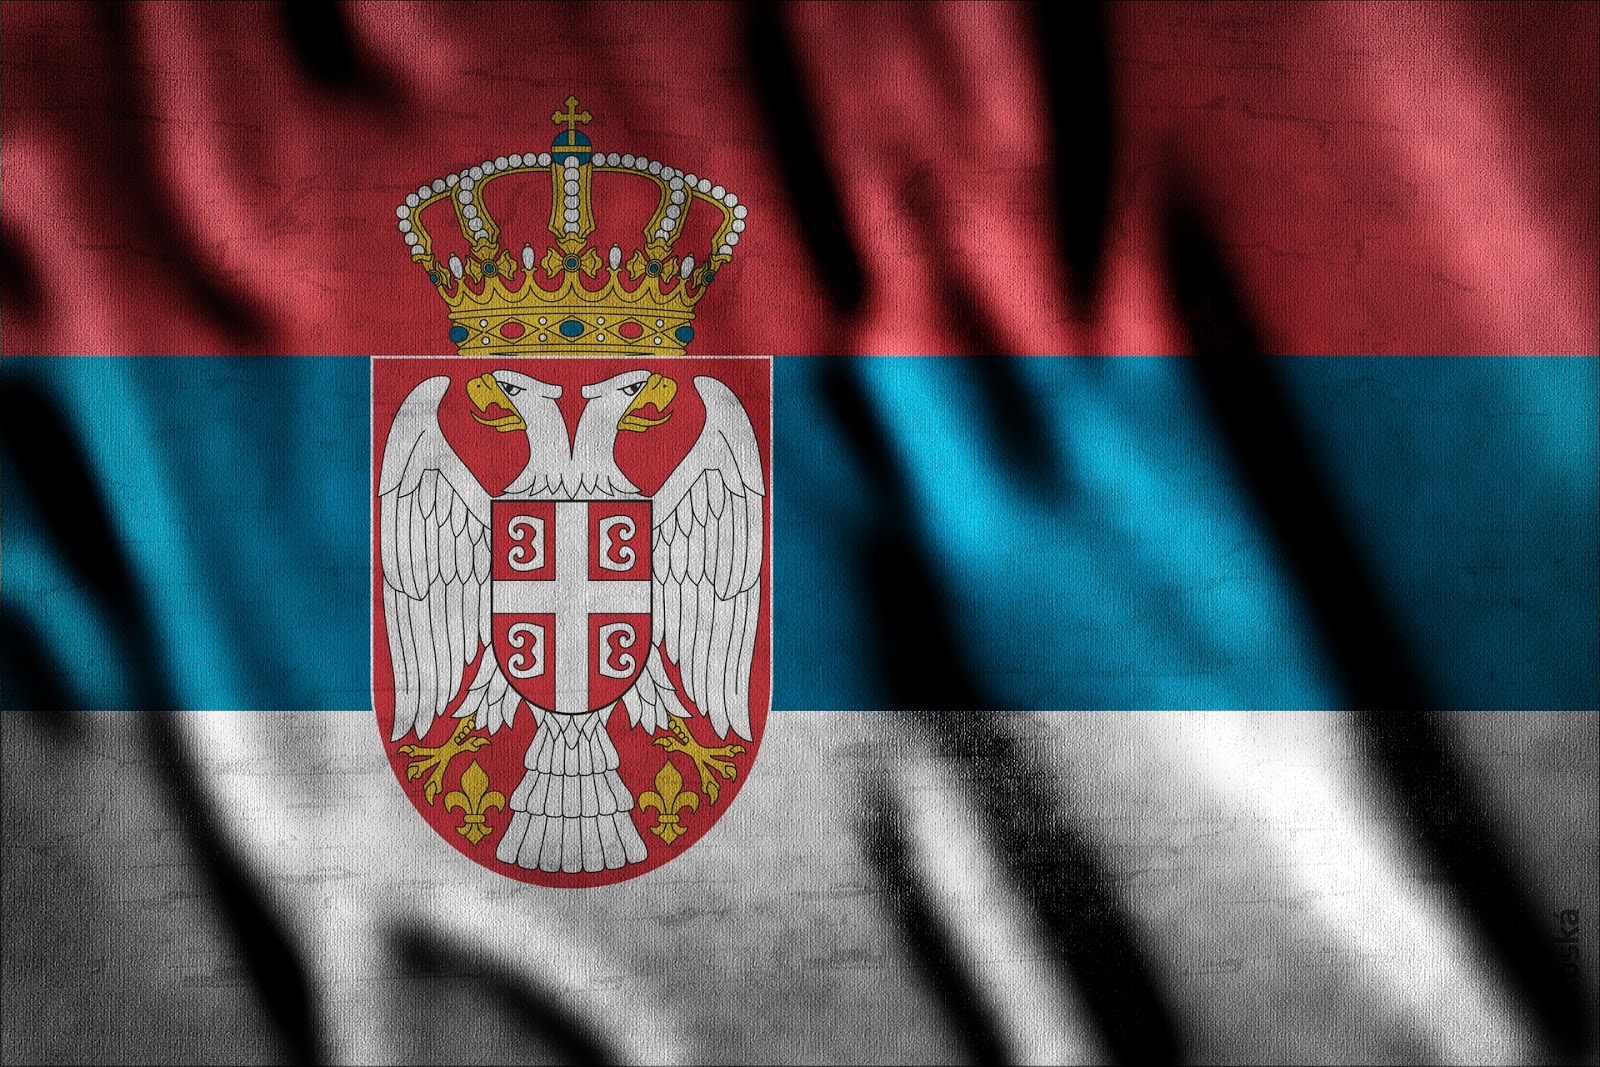 Zastava I Grb Srbije Serbian Flag Coat Of Arms Serbia Wallpaper